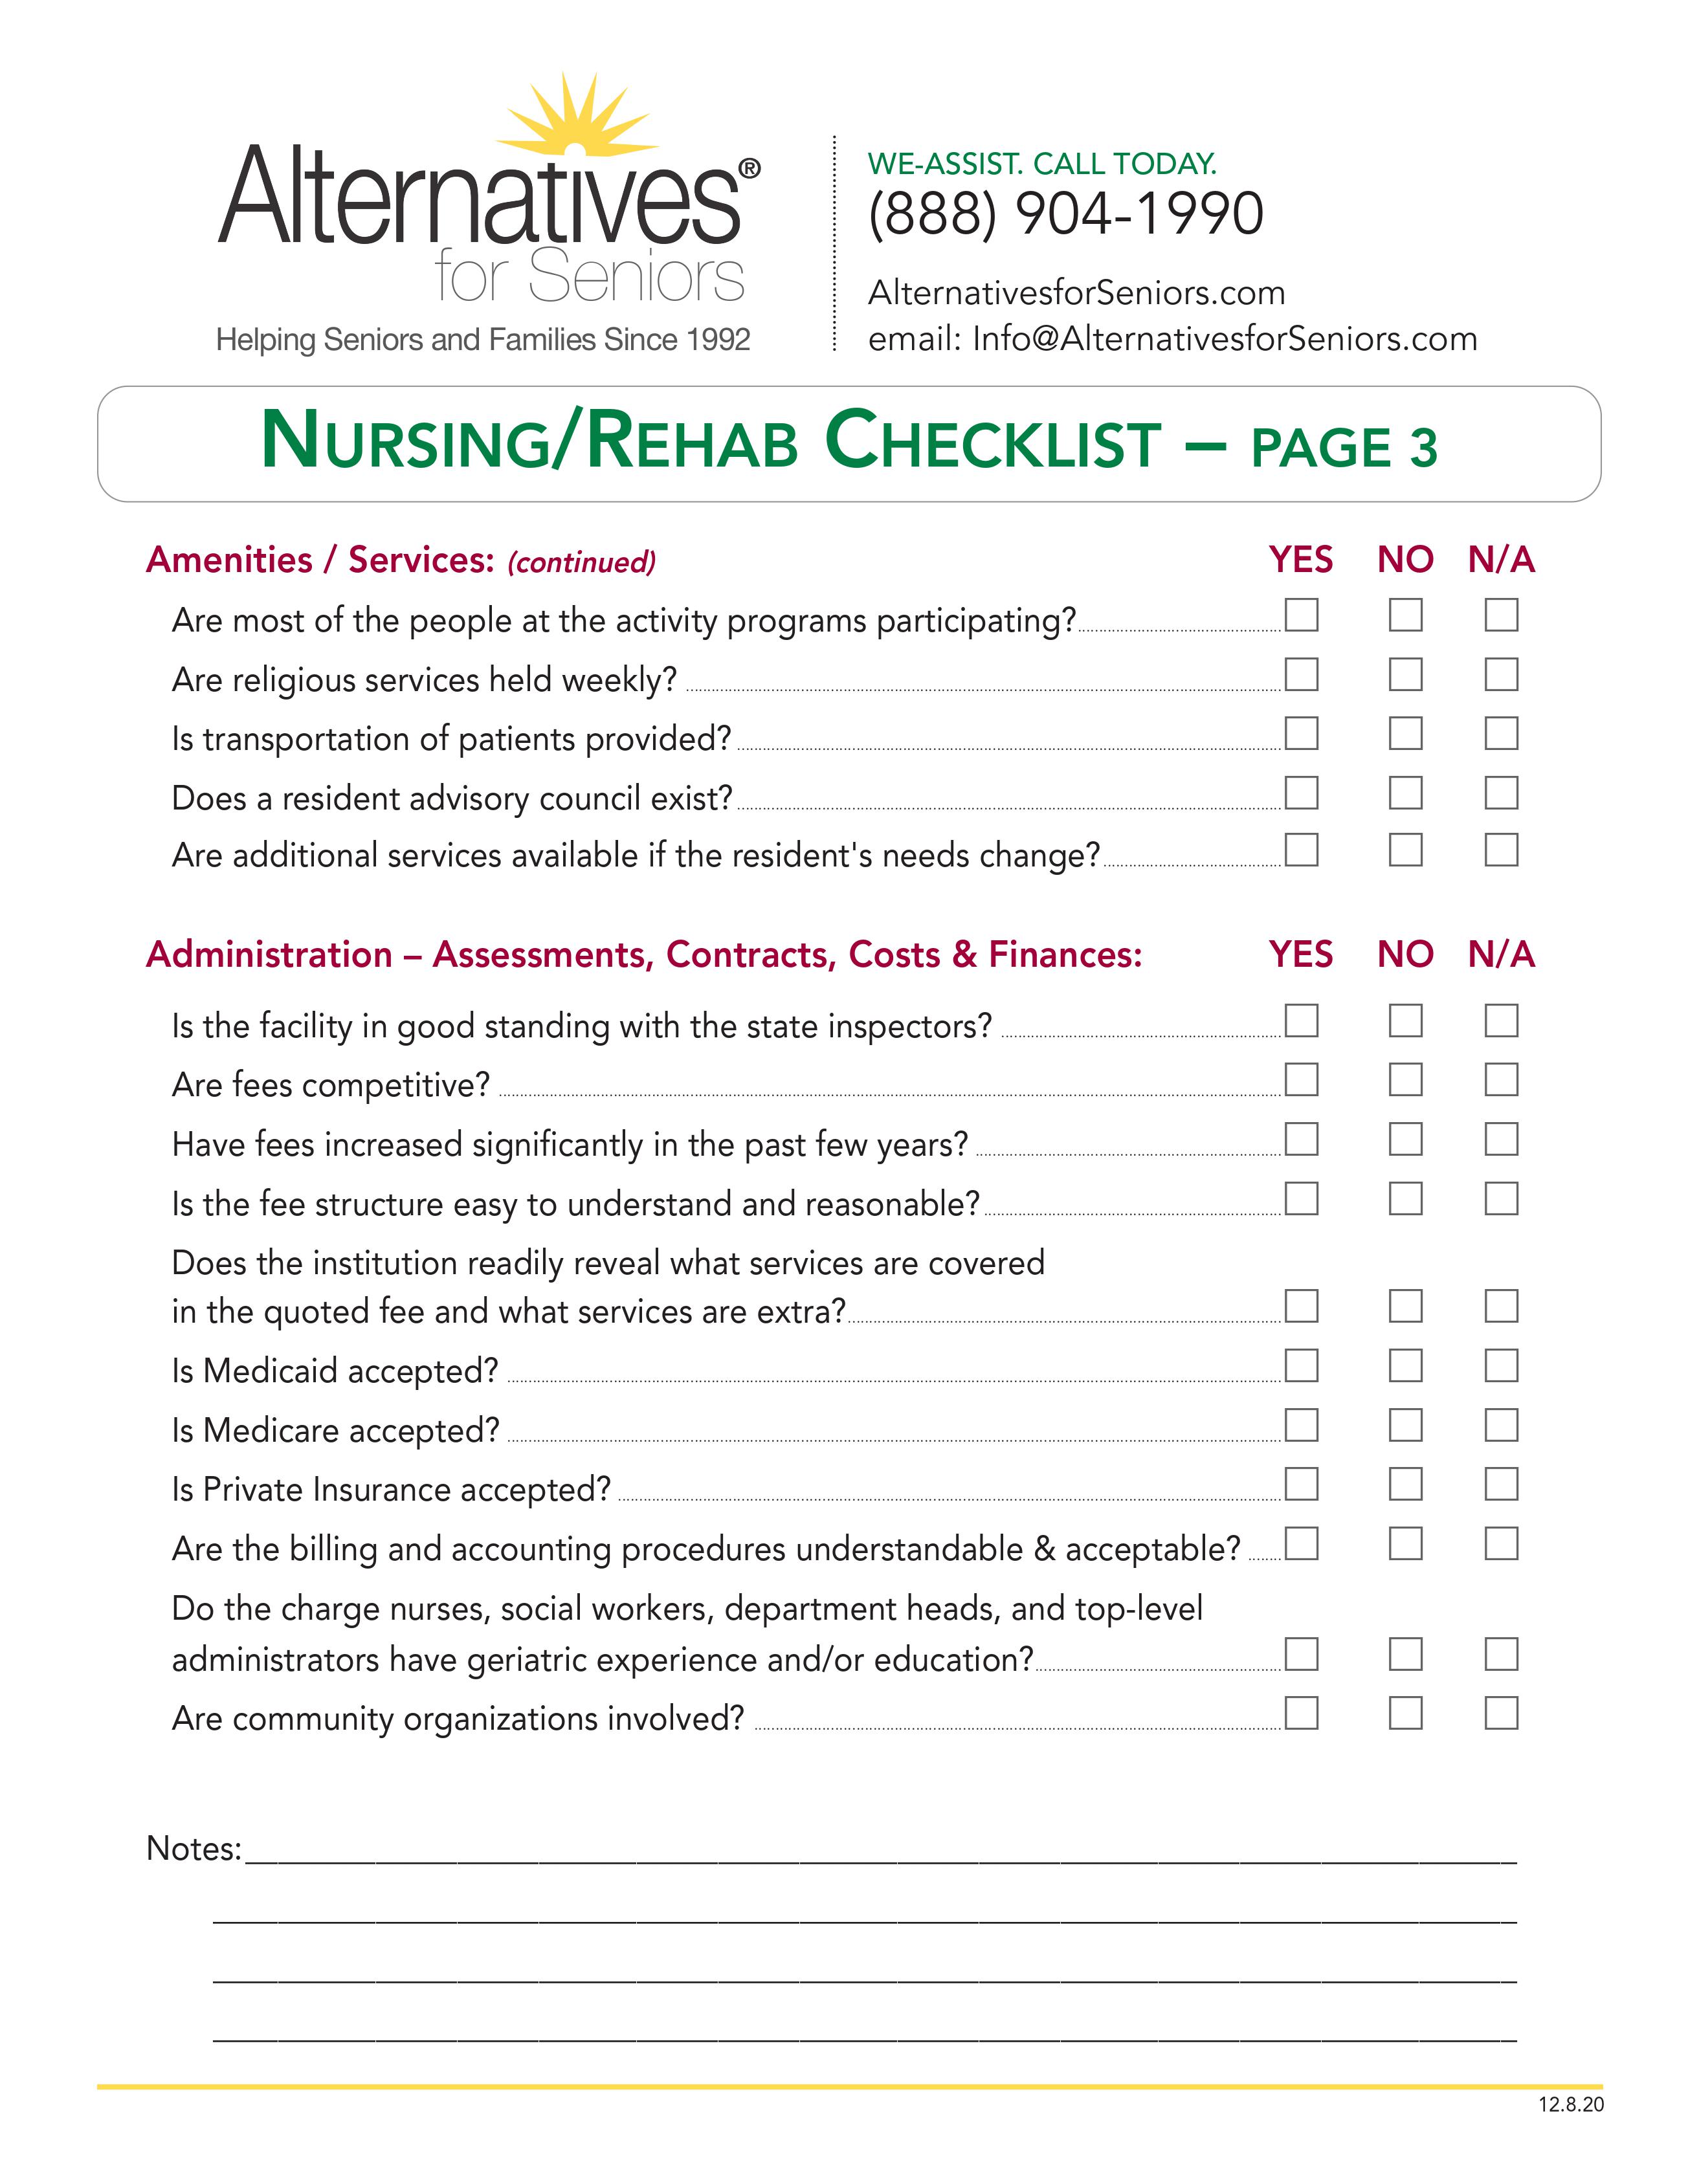 Nursing Home Checklist 3 of 3